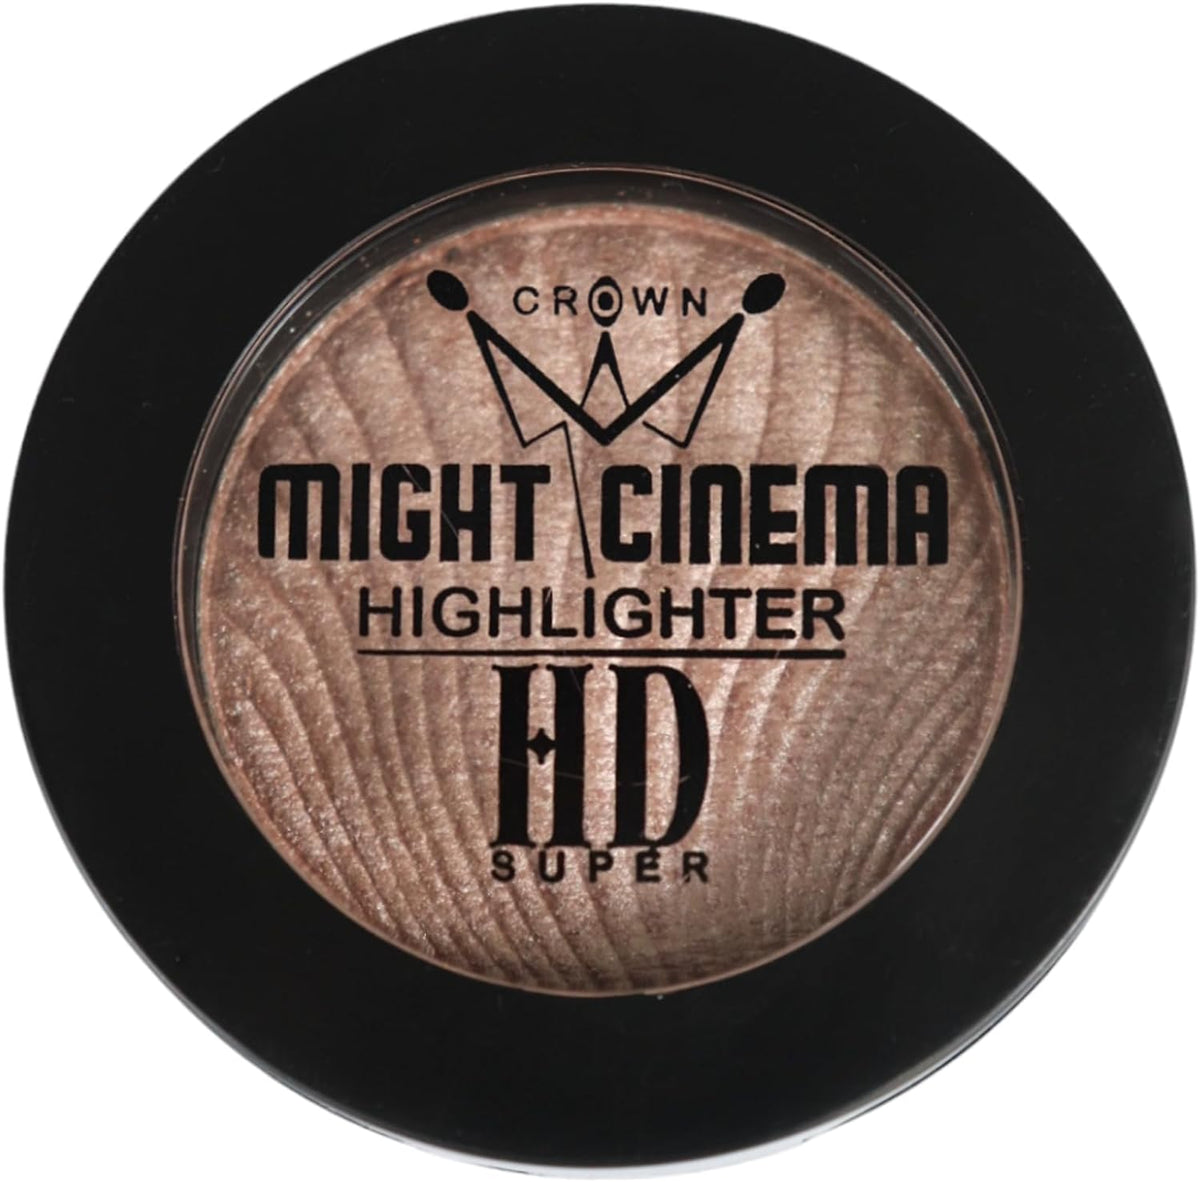 Might Cinema Highlighter HD Model : 1223 Color No : 103